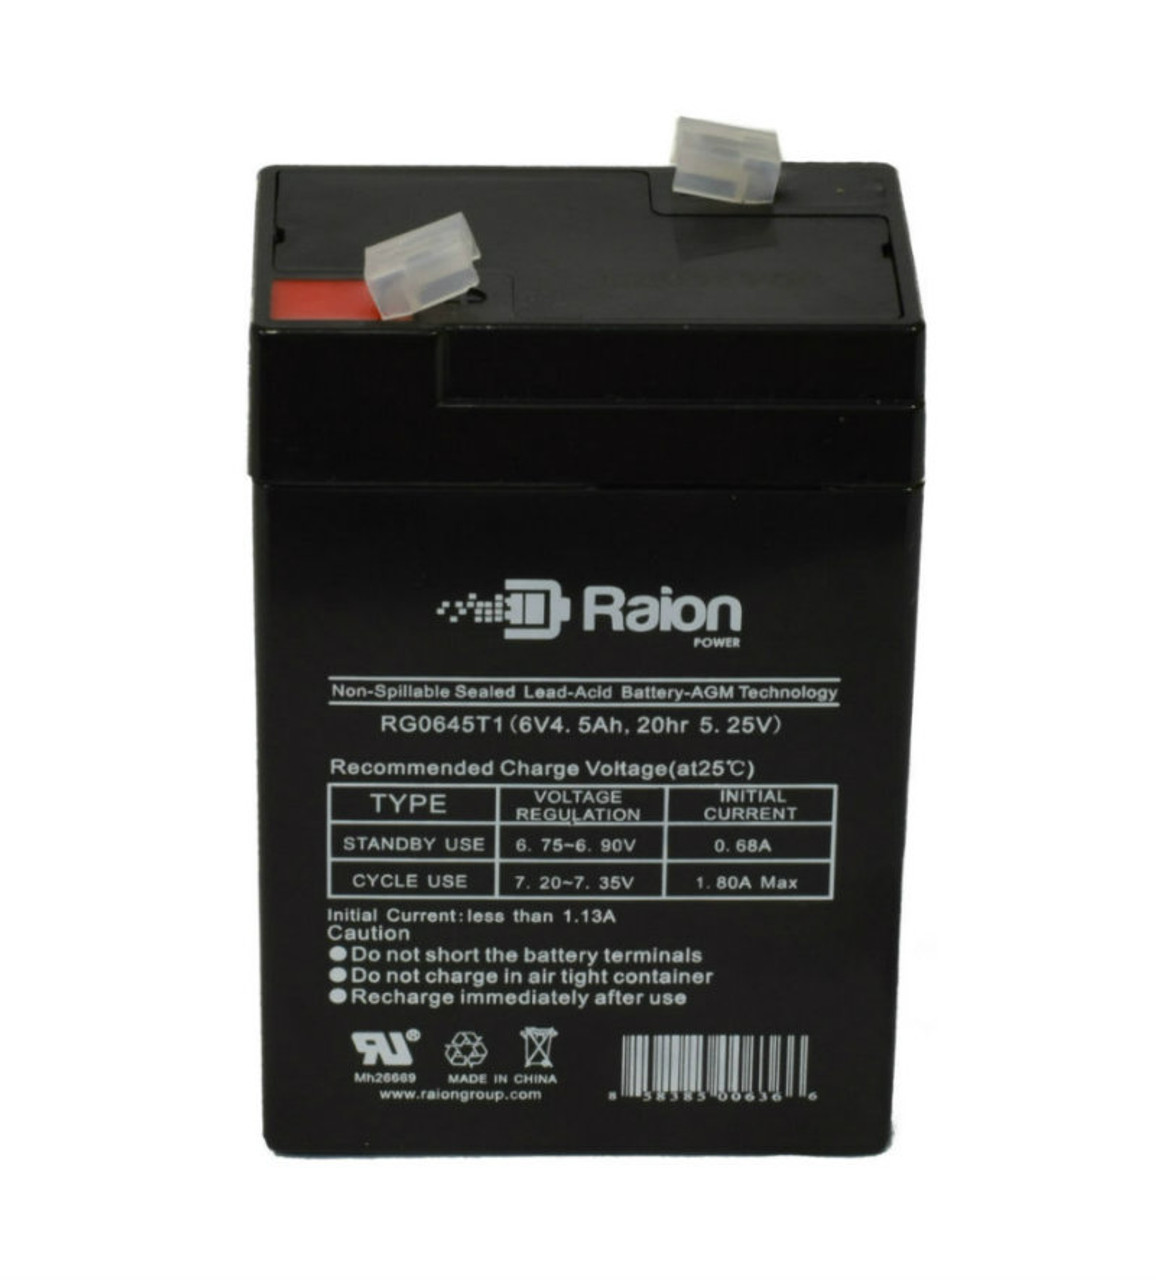 Raion Power RG0645T1 Replacement Battery Cartridge for Nellcor Puritan-Bennett Pulse Oximeter N1000